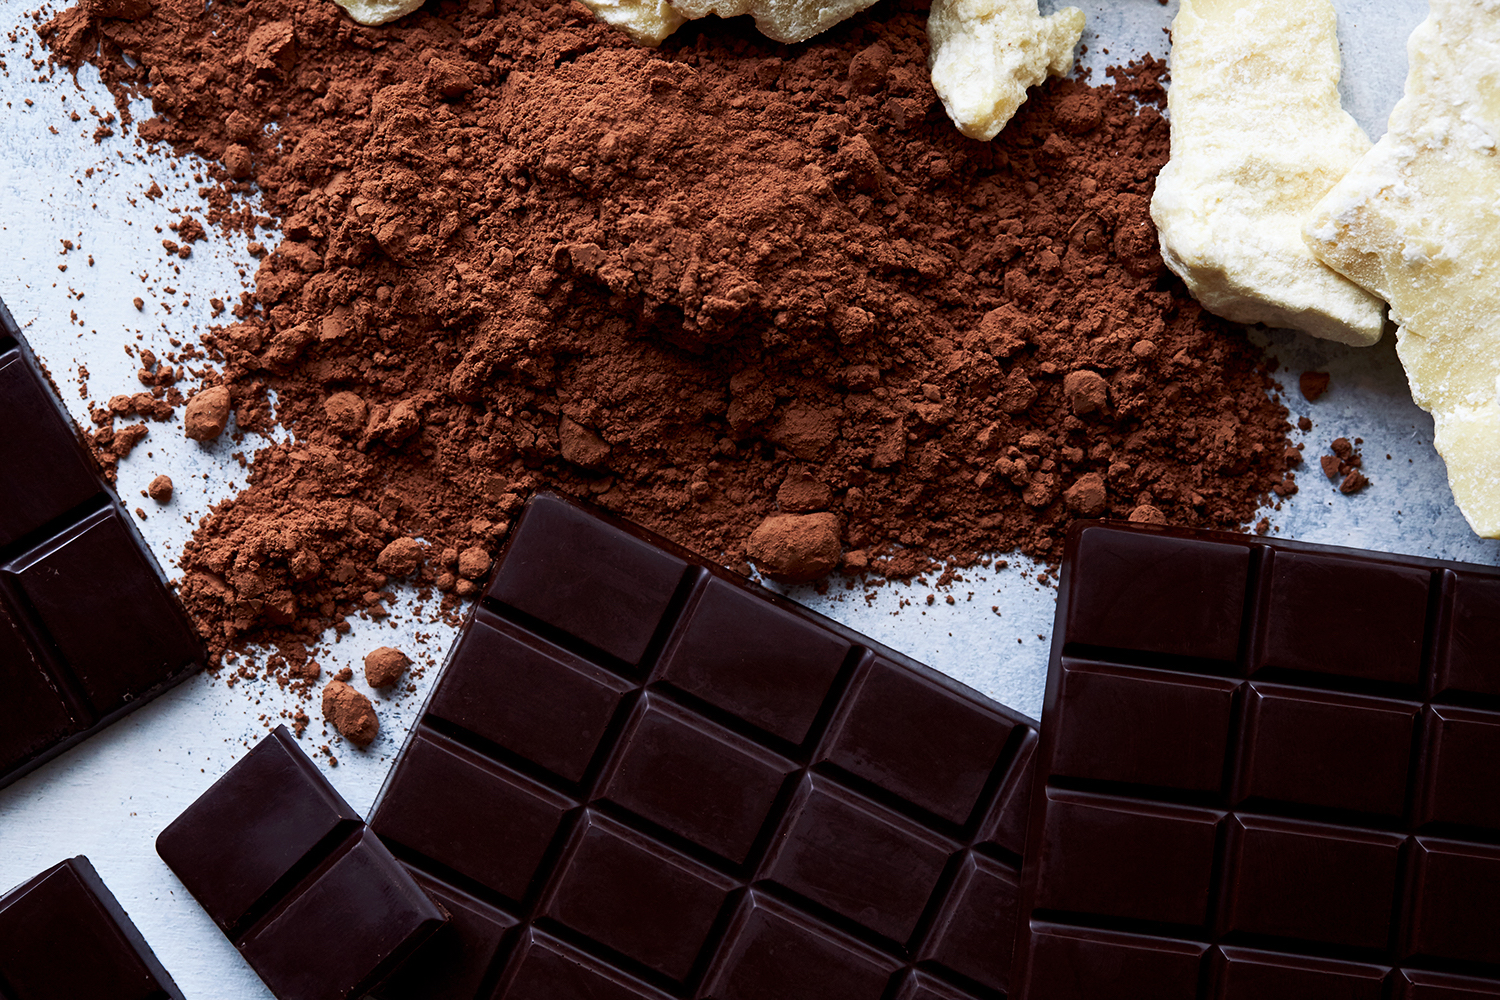 How to make dark chocolate at home